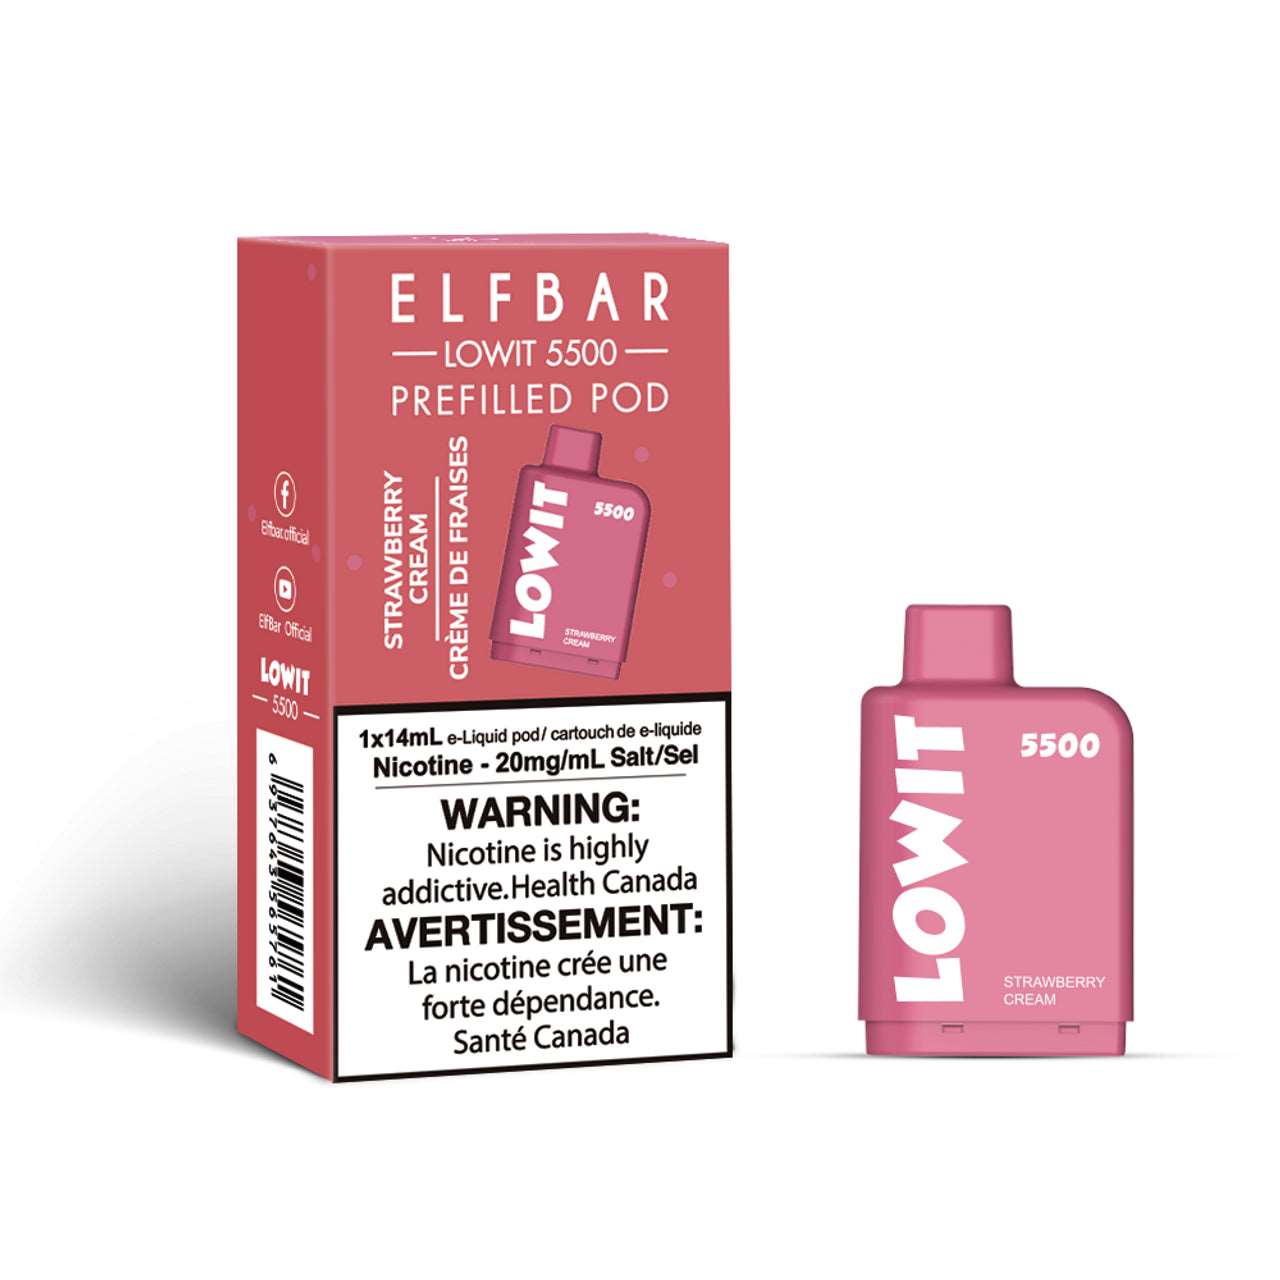 ELFBAR - LOW IT STRAWBERRY CREAM 5500 - Clutch Vape